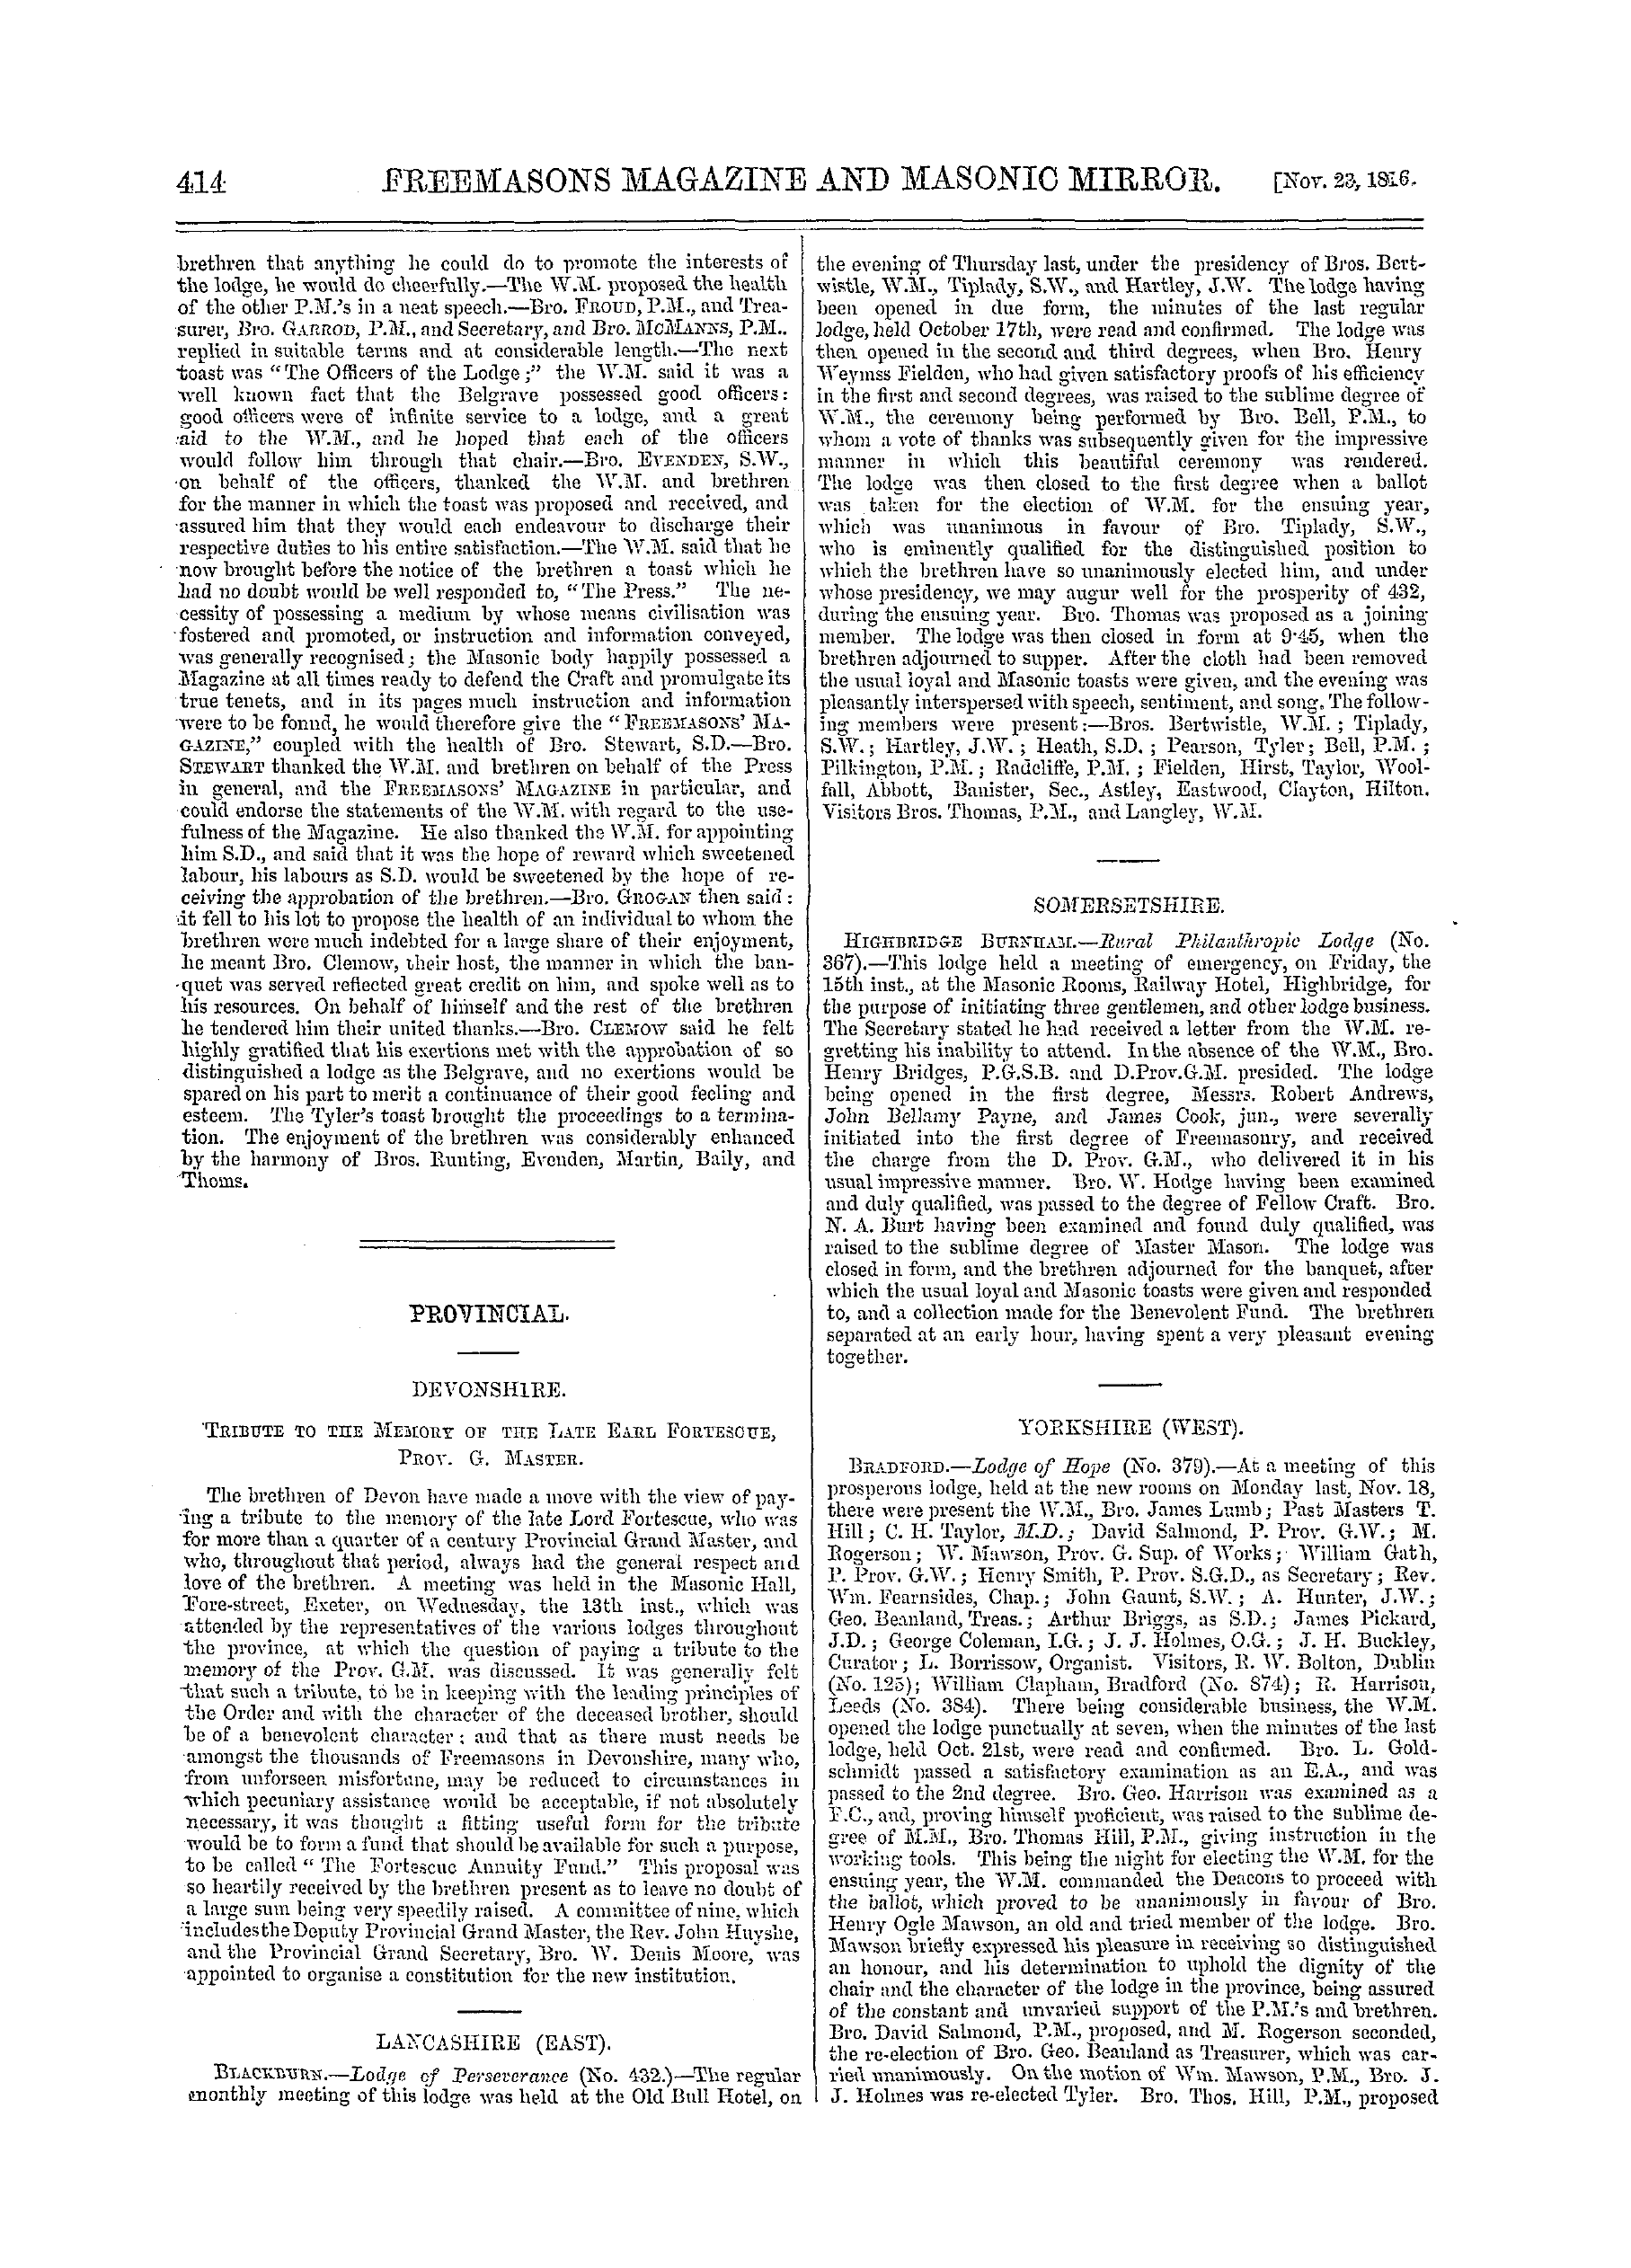 The Freemasons' Monthly Magazine: 1861-11-23 - Metropolitan.